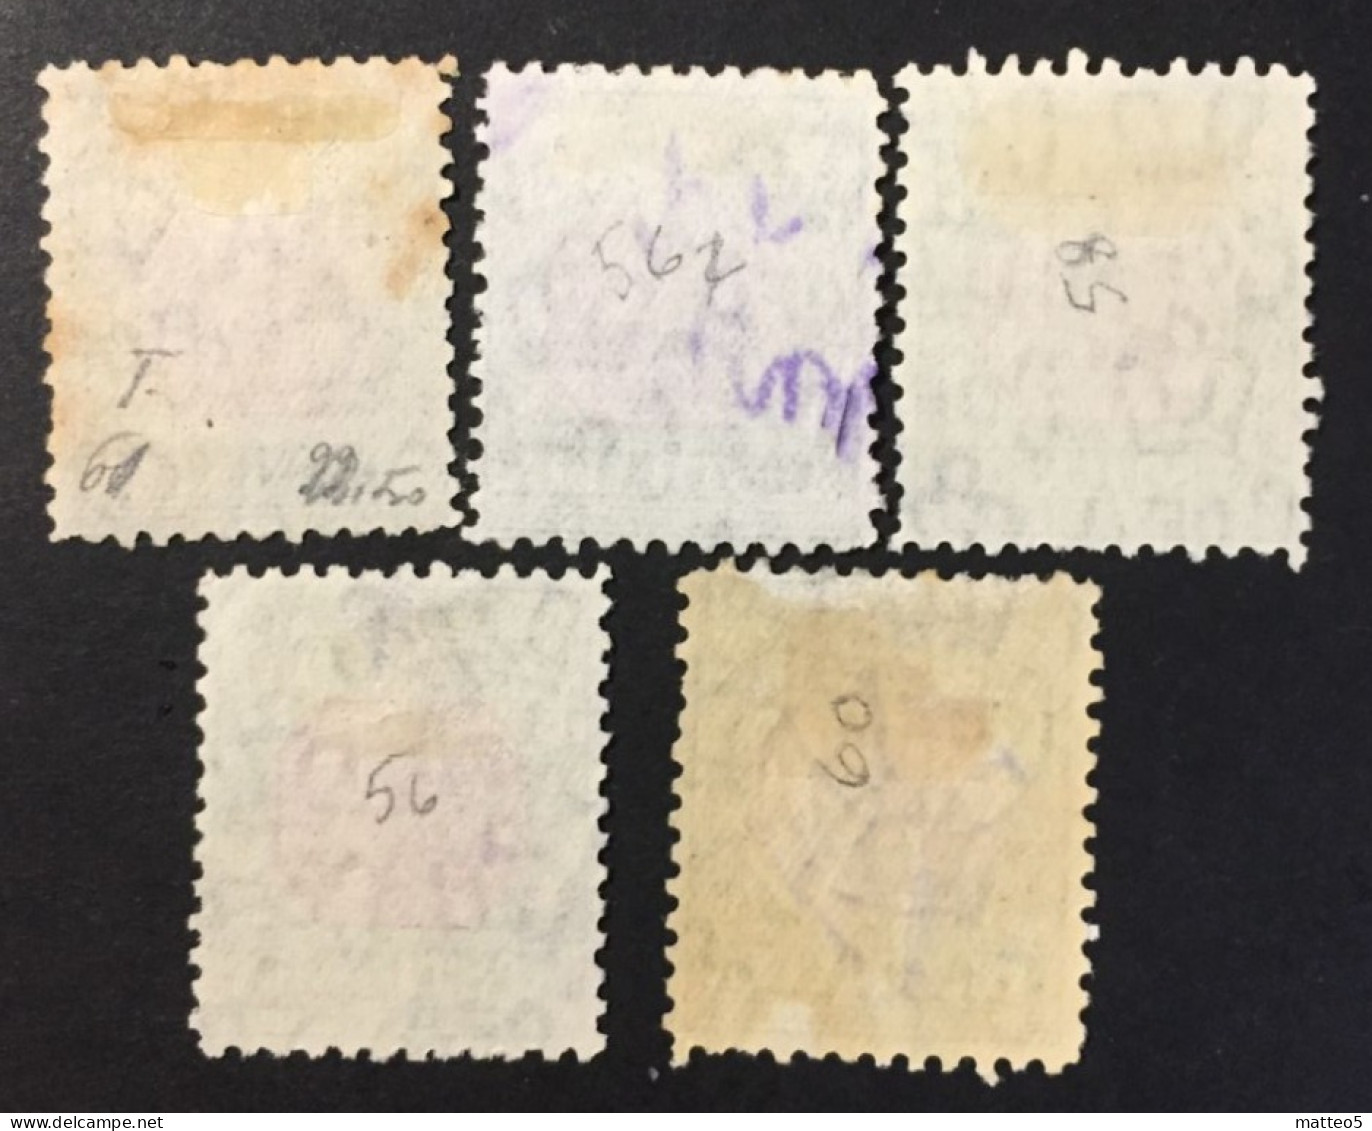 1932 /38 - Australia - Postage Due Stamp - 1D,2D,1/2D,4D,1/ - Used - Postage Due